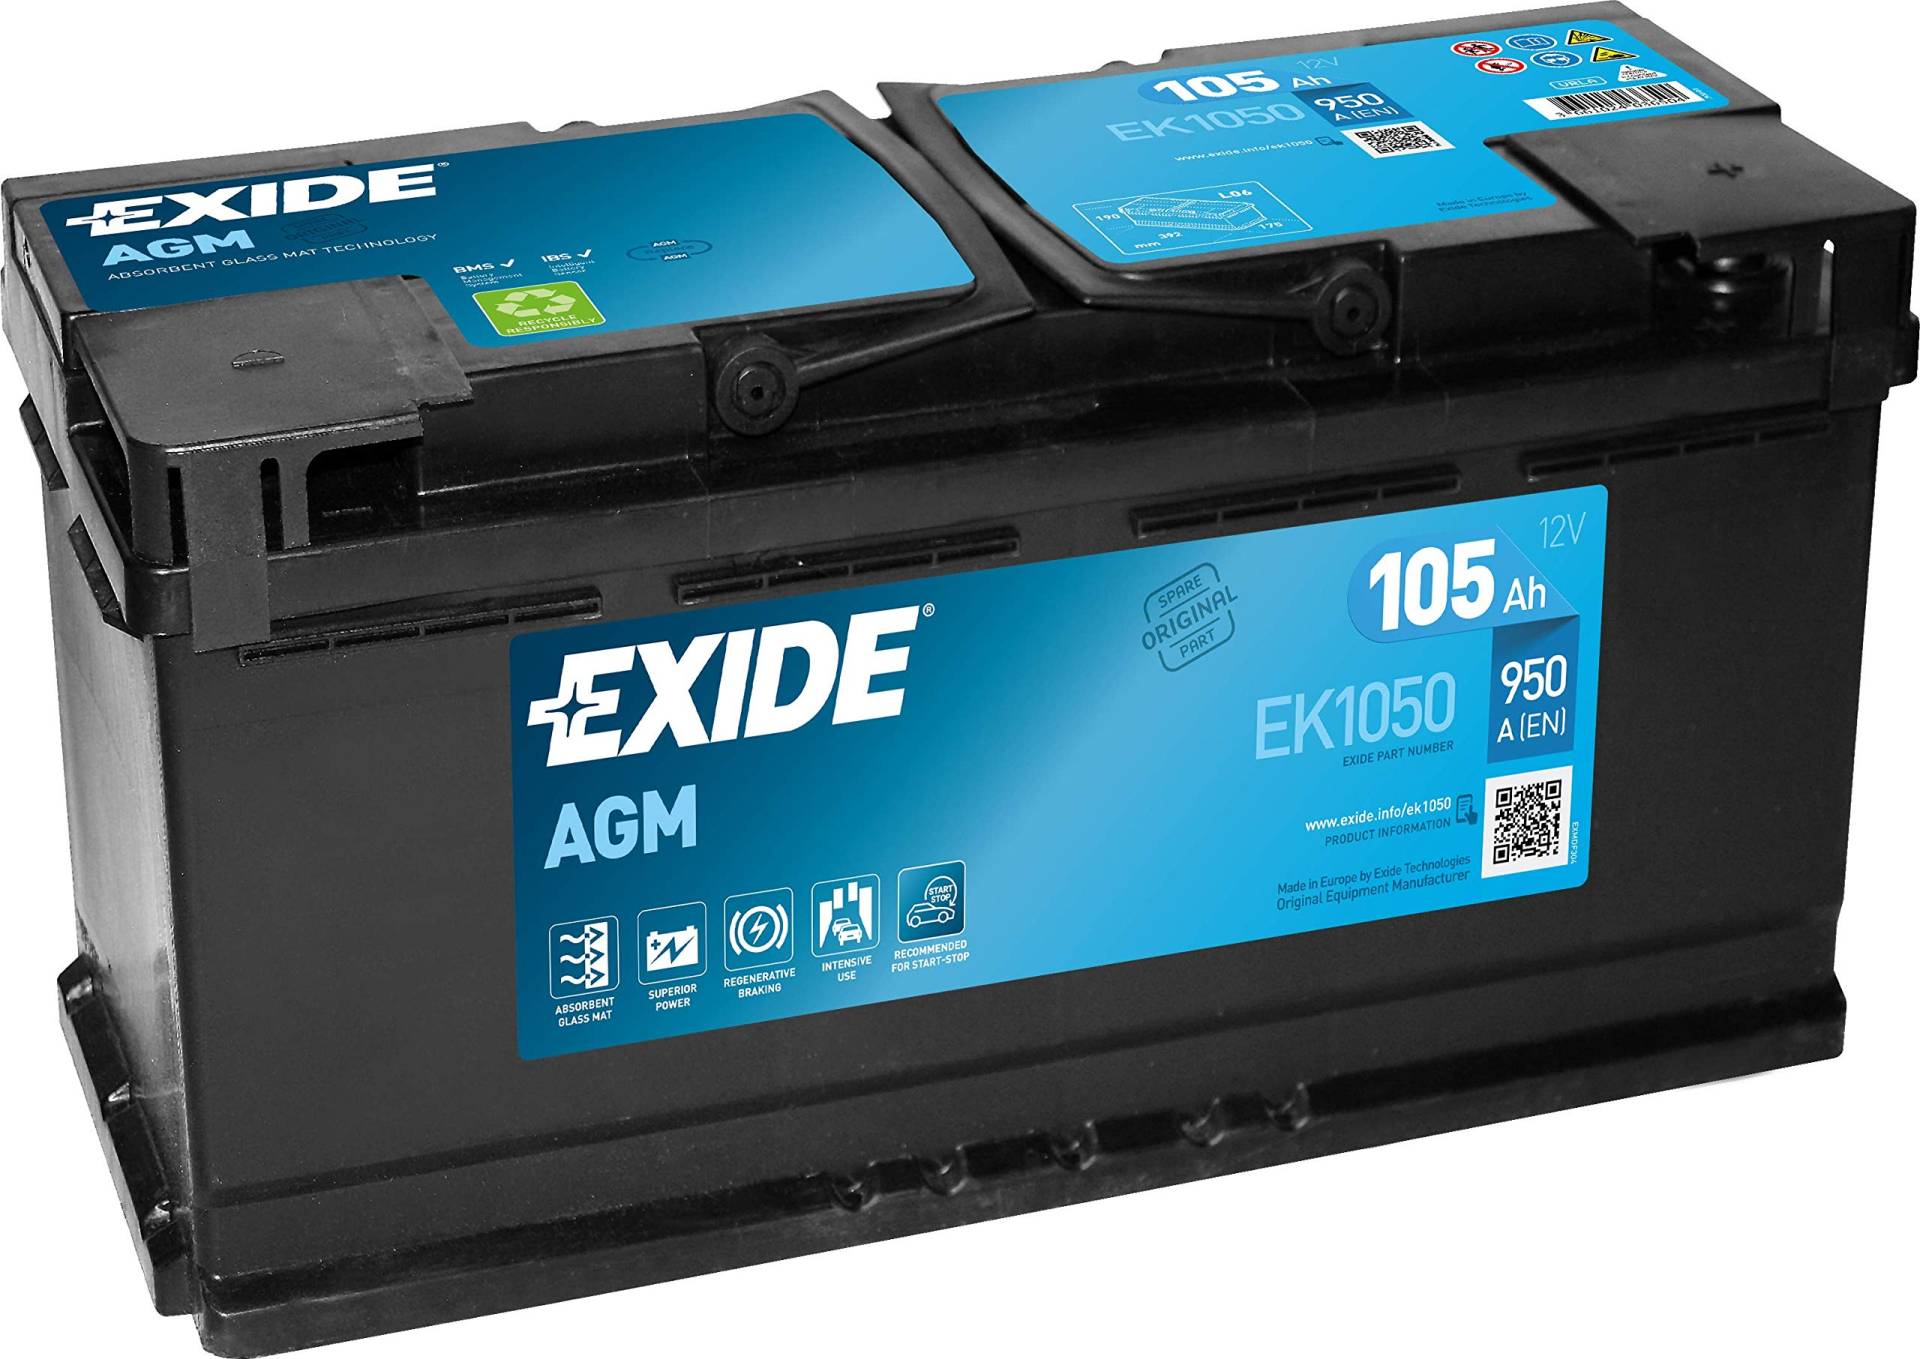 Batterie ek1050 exide agm von Exide